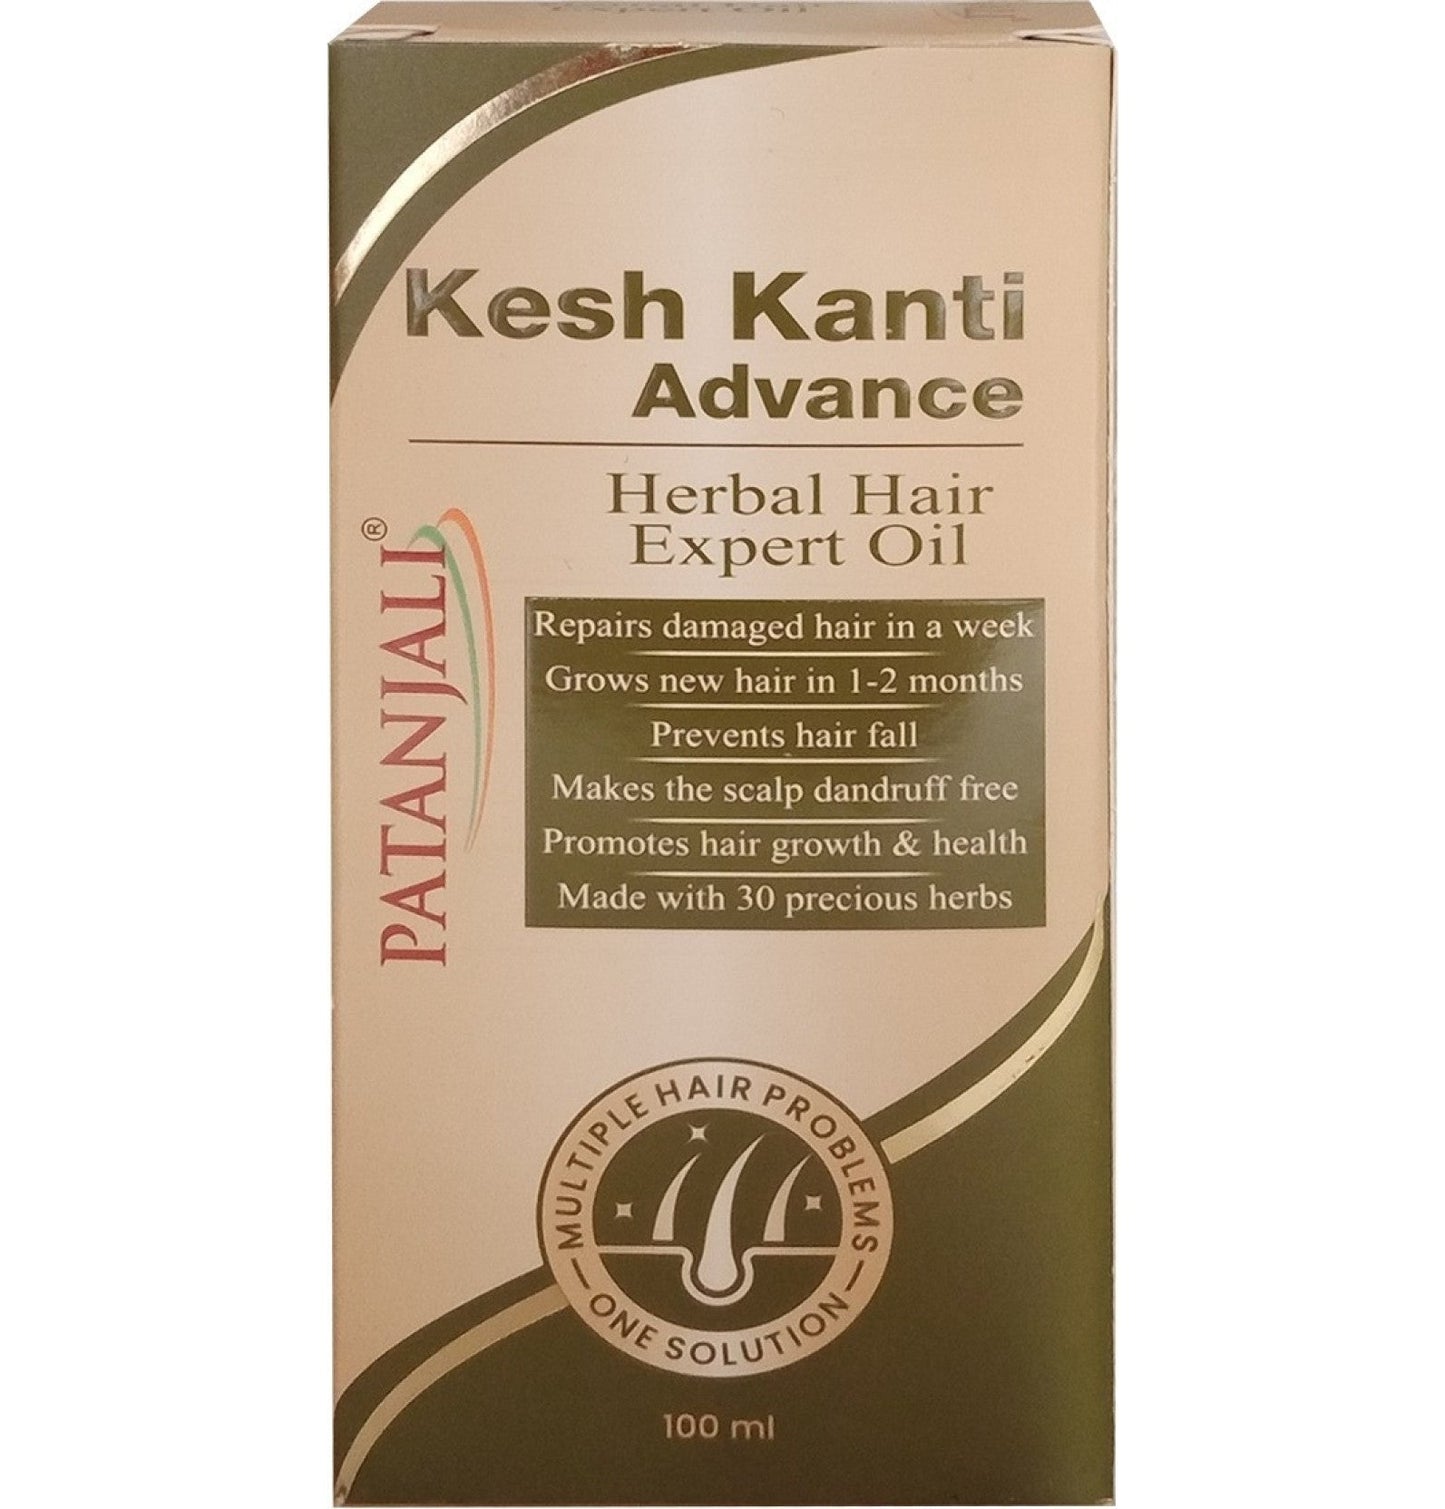 Patanjali Kesh Kanti Advanced Herbal Hair Expert Oil - buy-in-usa-australia-canada